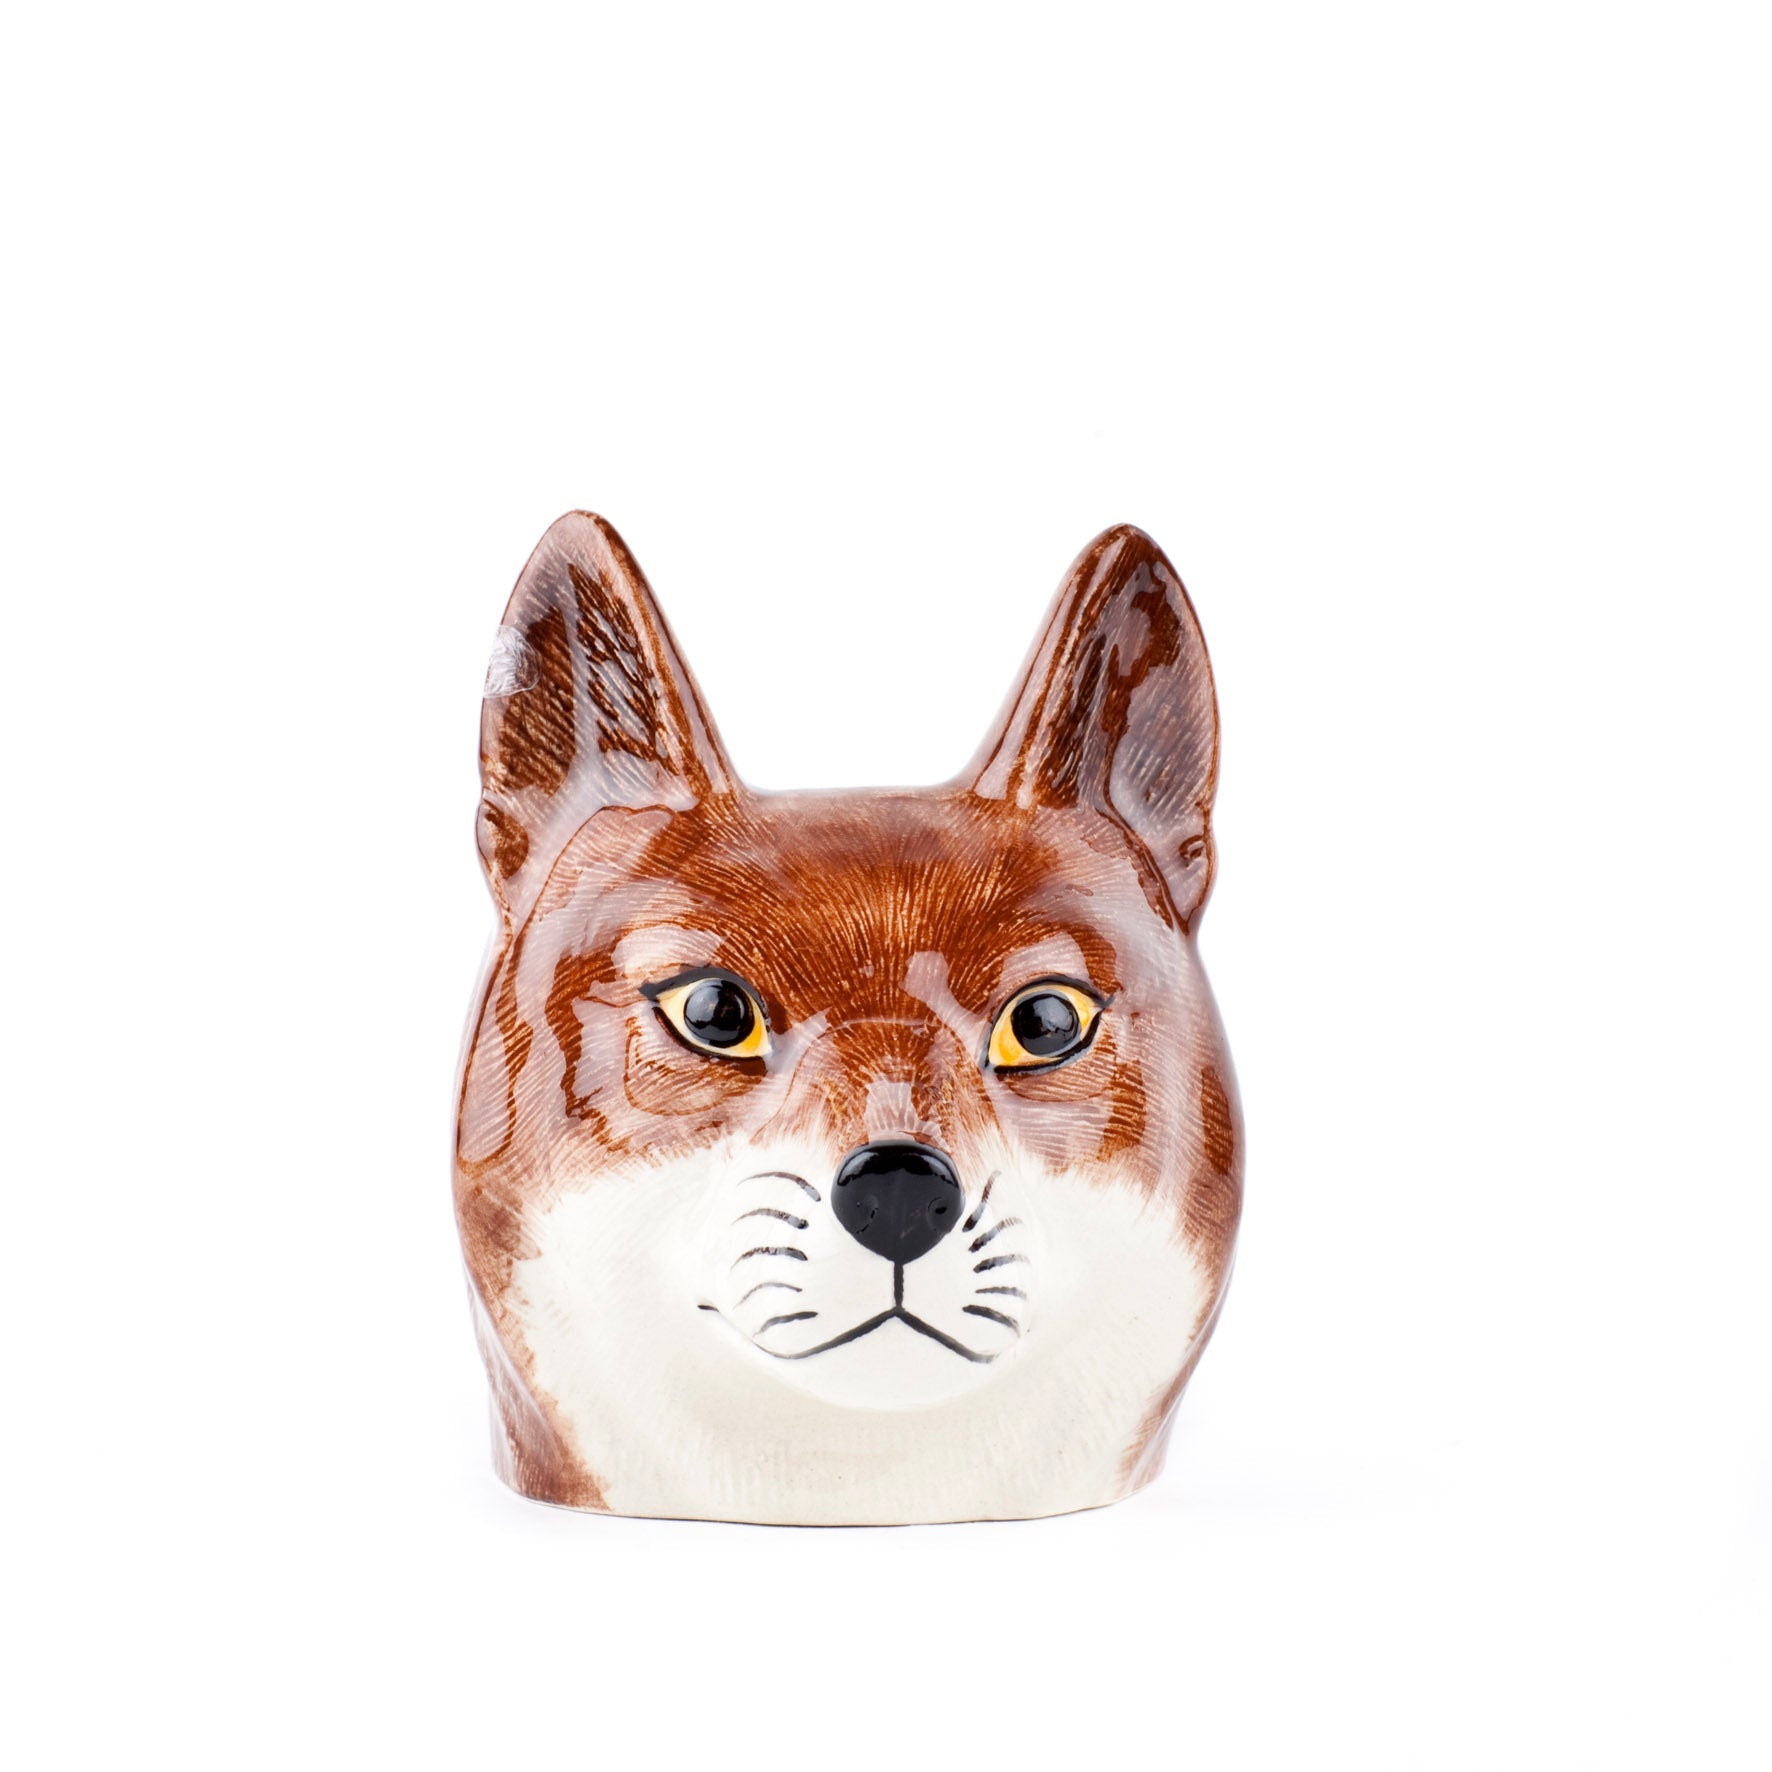 Fox face egg cup